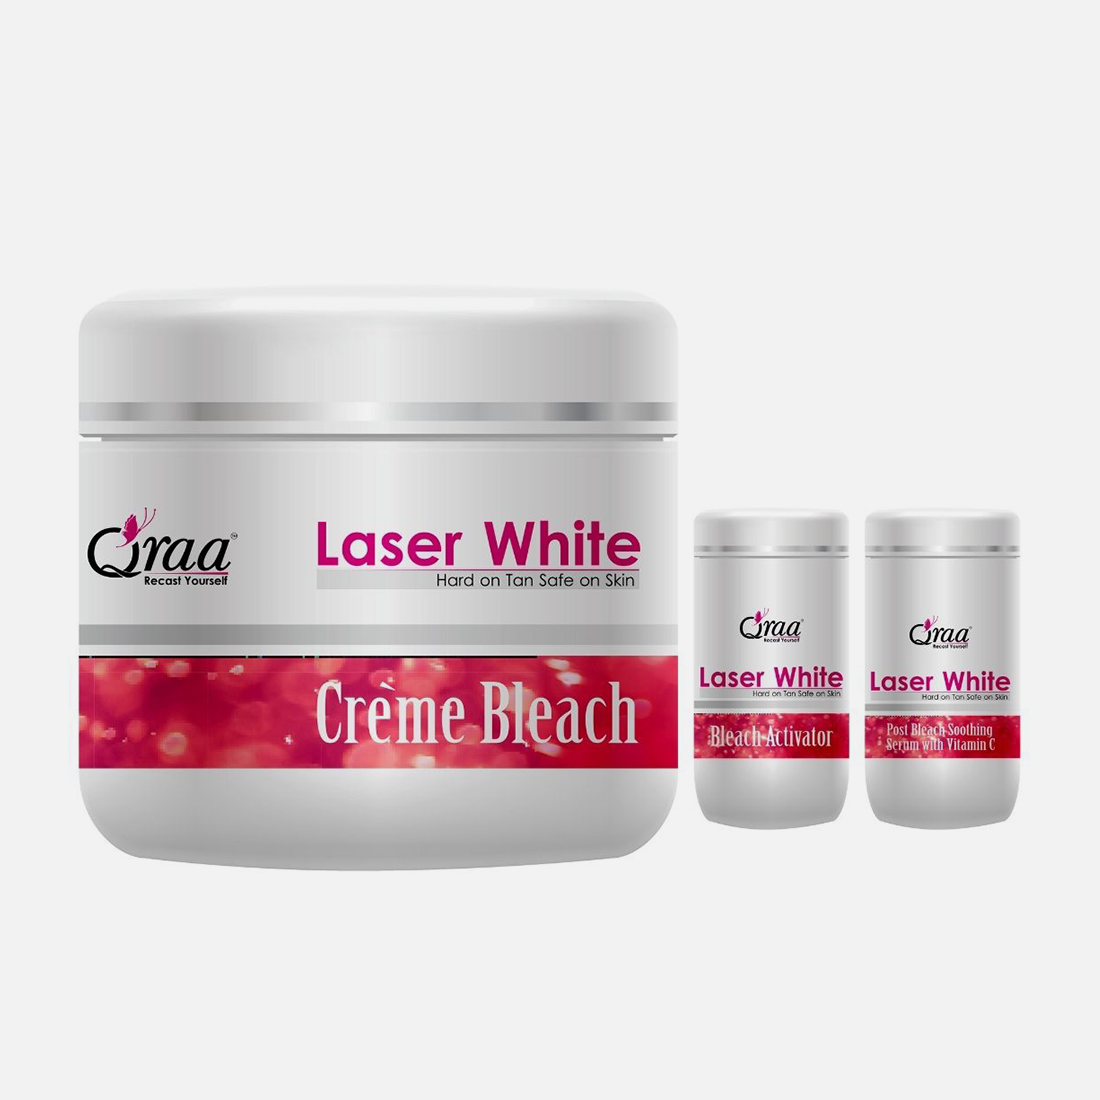 Qraa Laser White Creme Bleach Kit